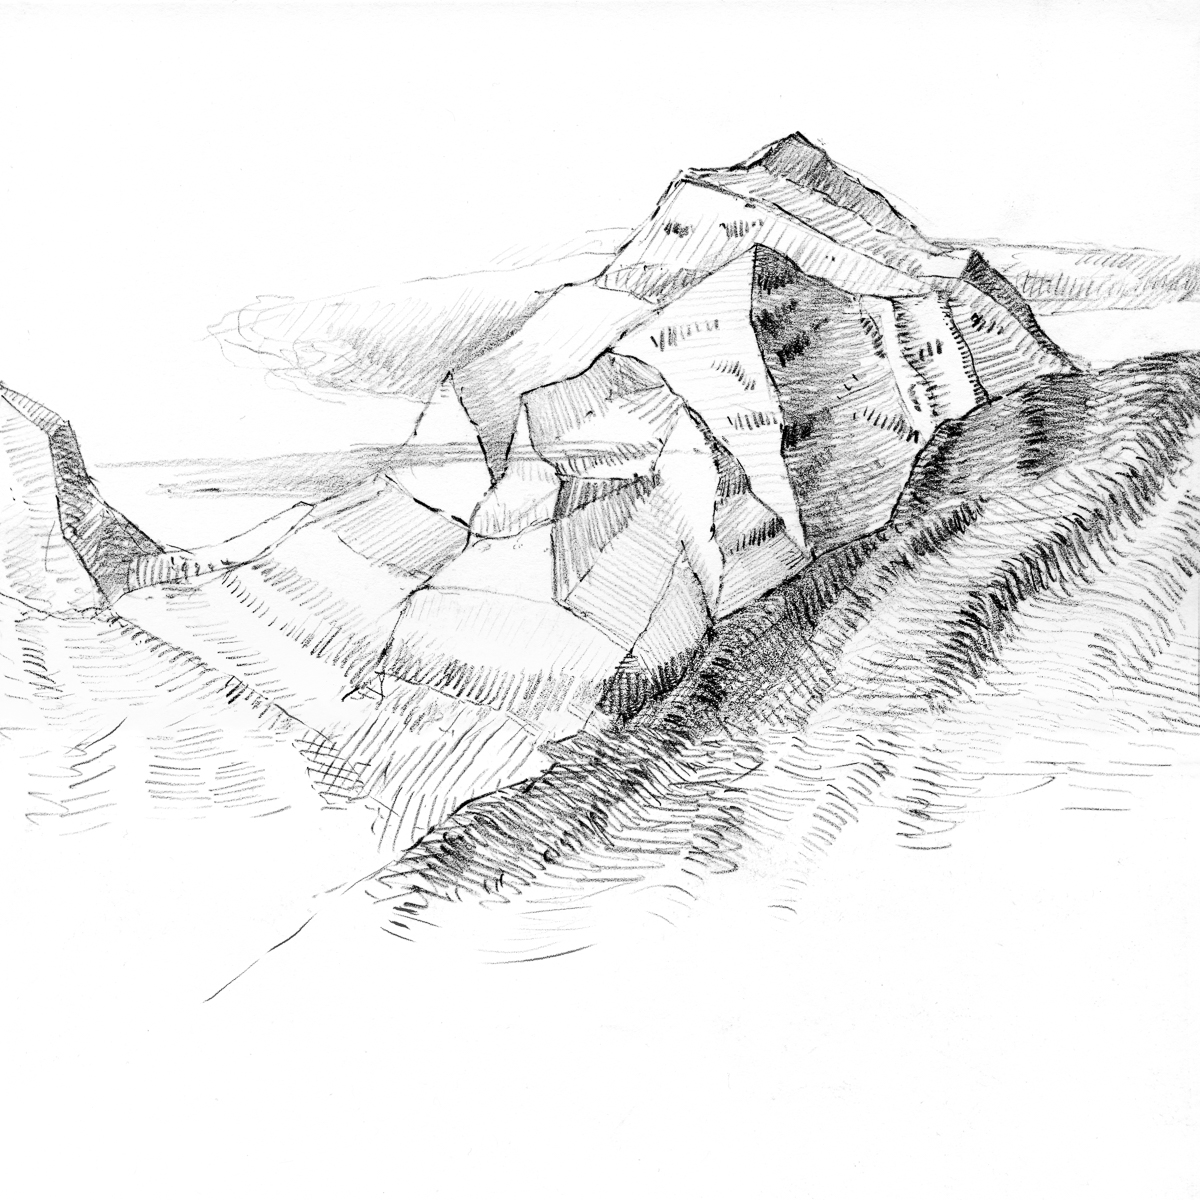 Caspar Fairhall, Mountain study, 2018, 21 x 21 cm, graphite on paper